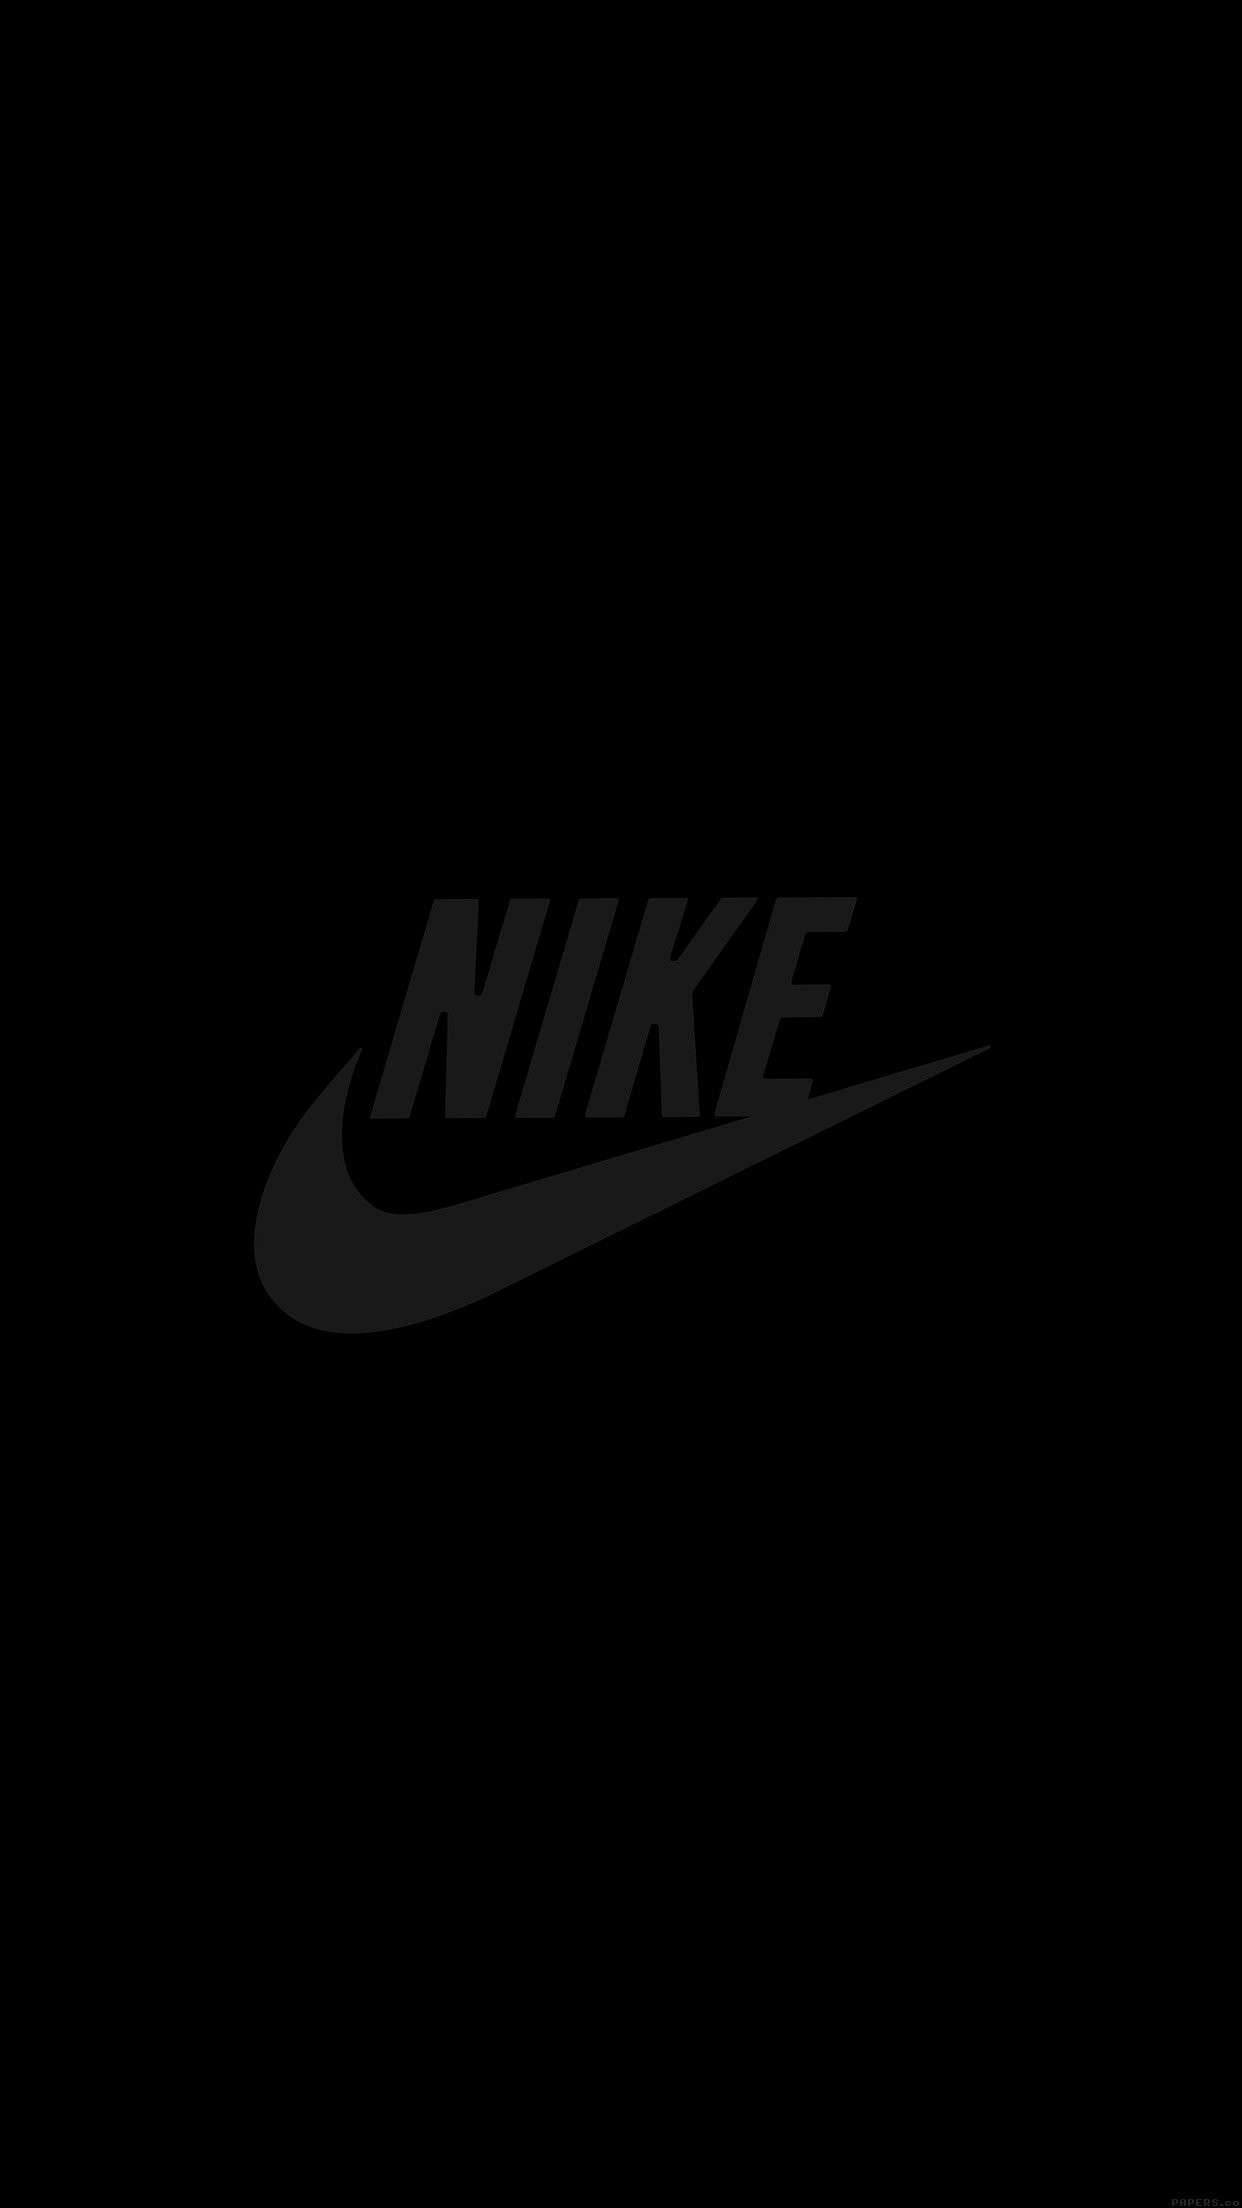 Black Nike Logo Wallpapers - Top Free Black Nike Logo Backgrounds ...